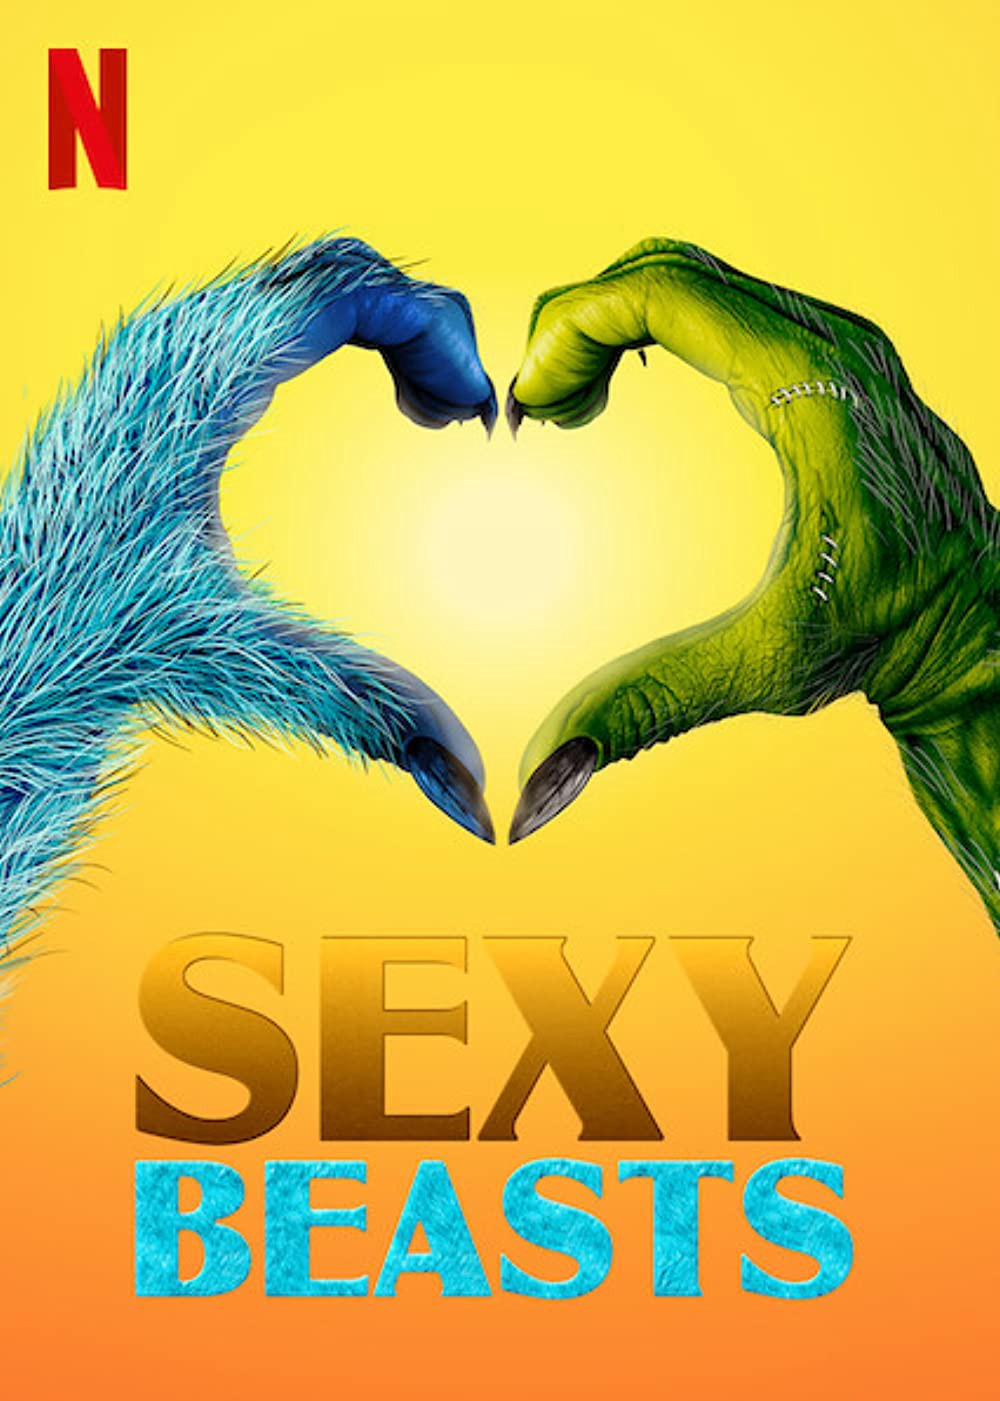 Is Sexy Beasts on Netflix